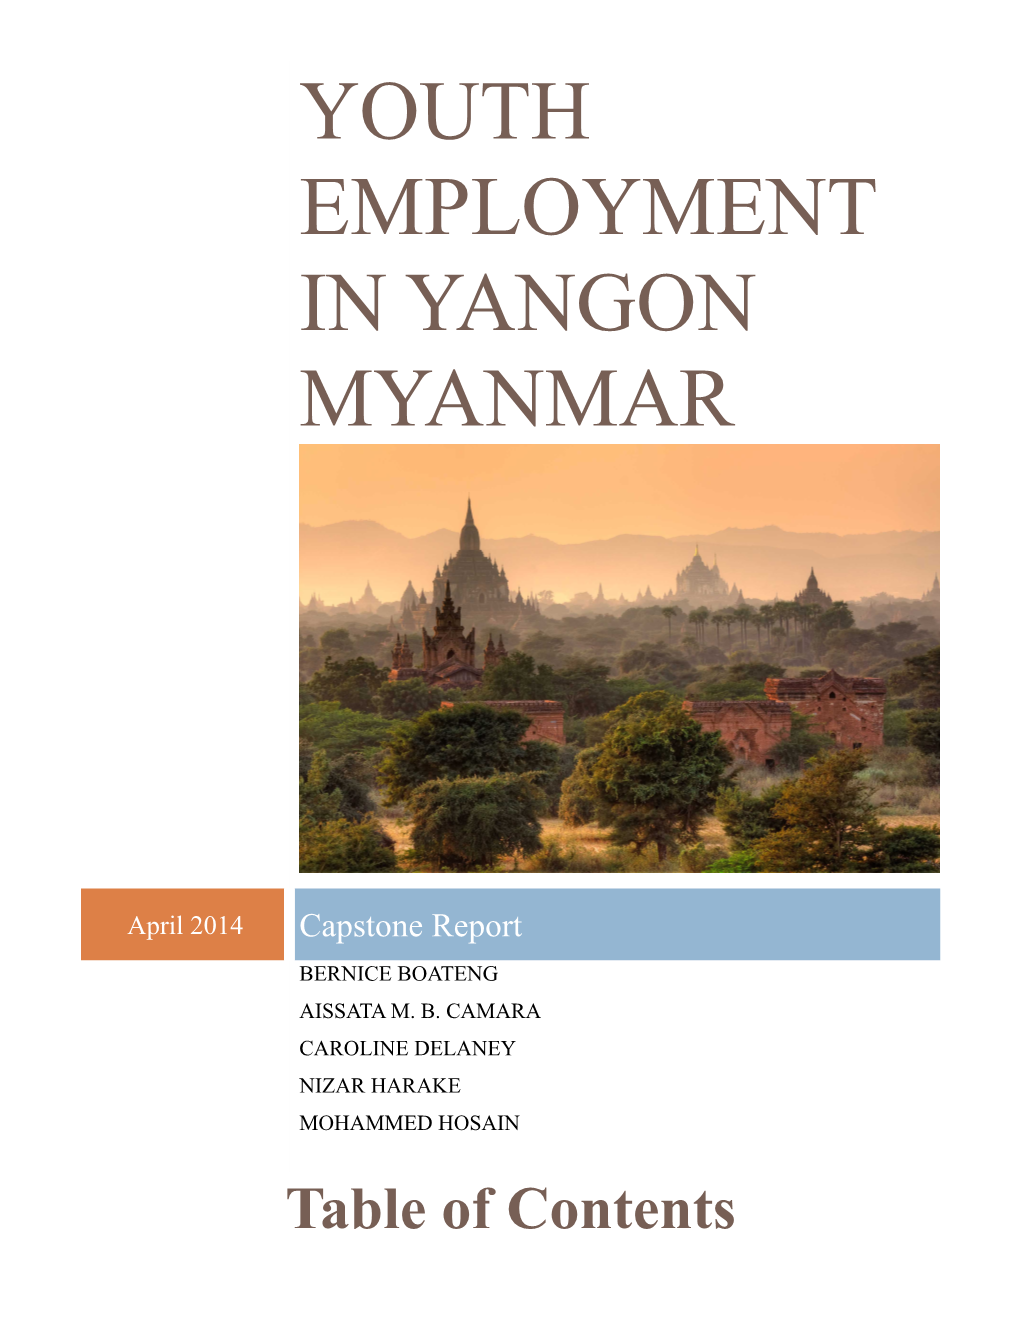 Myanmar Youth Employment